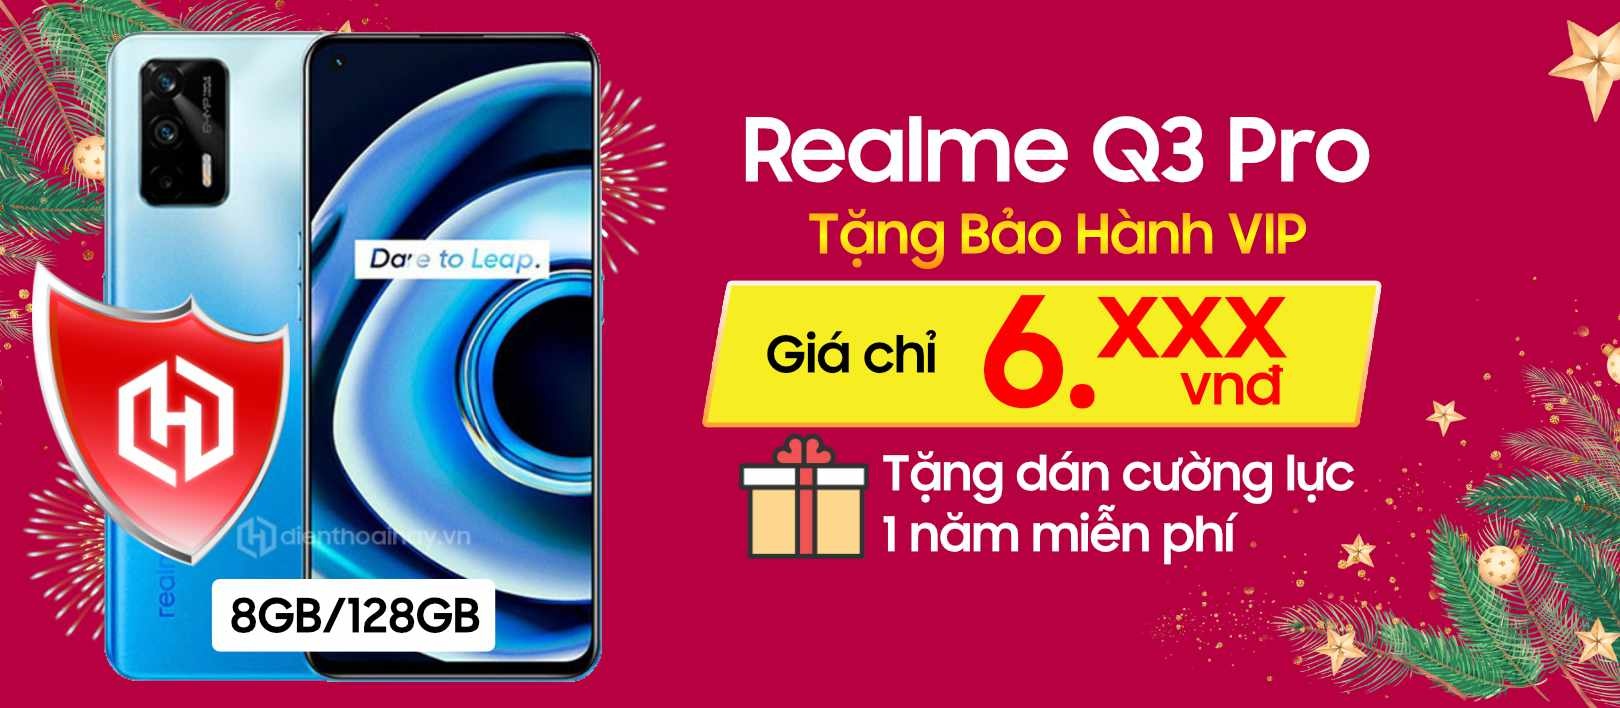 Realme Q3 Pro Tặng 1 năm dán cường lực